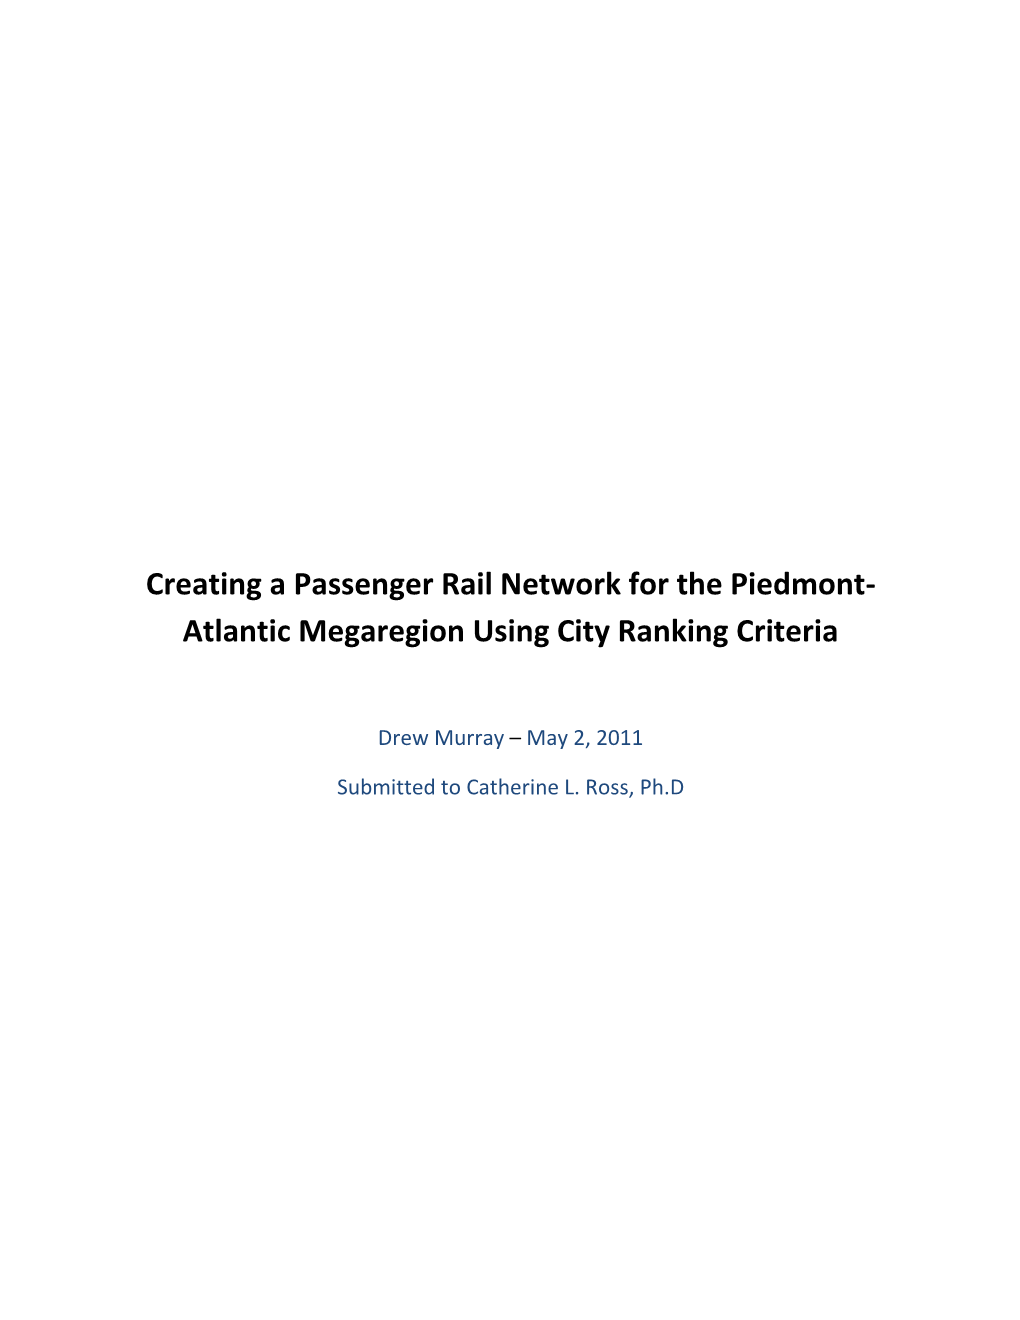 Creating a Passenger Rail Network for the Piedmont- Atlantic Megaregion Using City Ranking Criteria